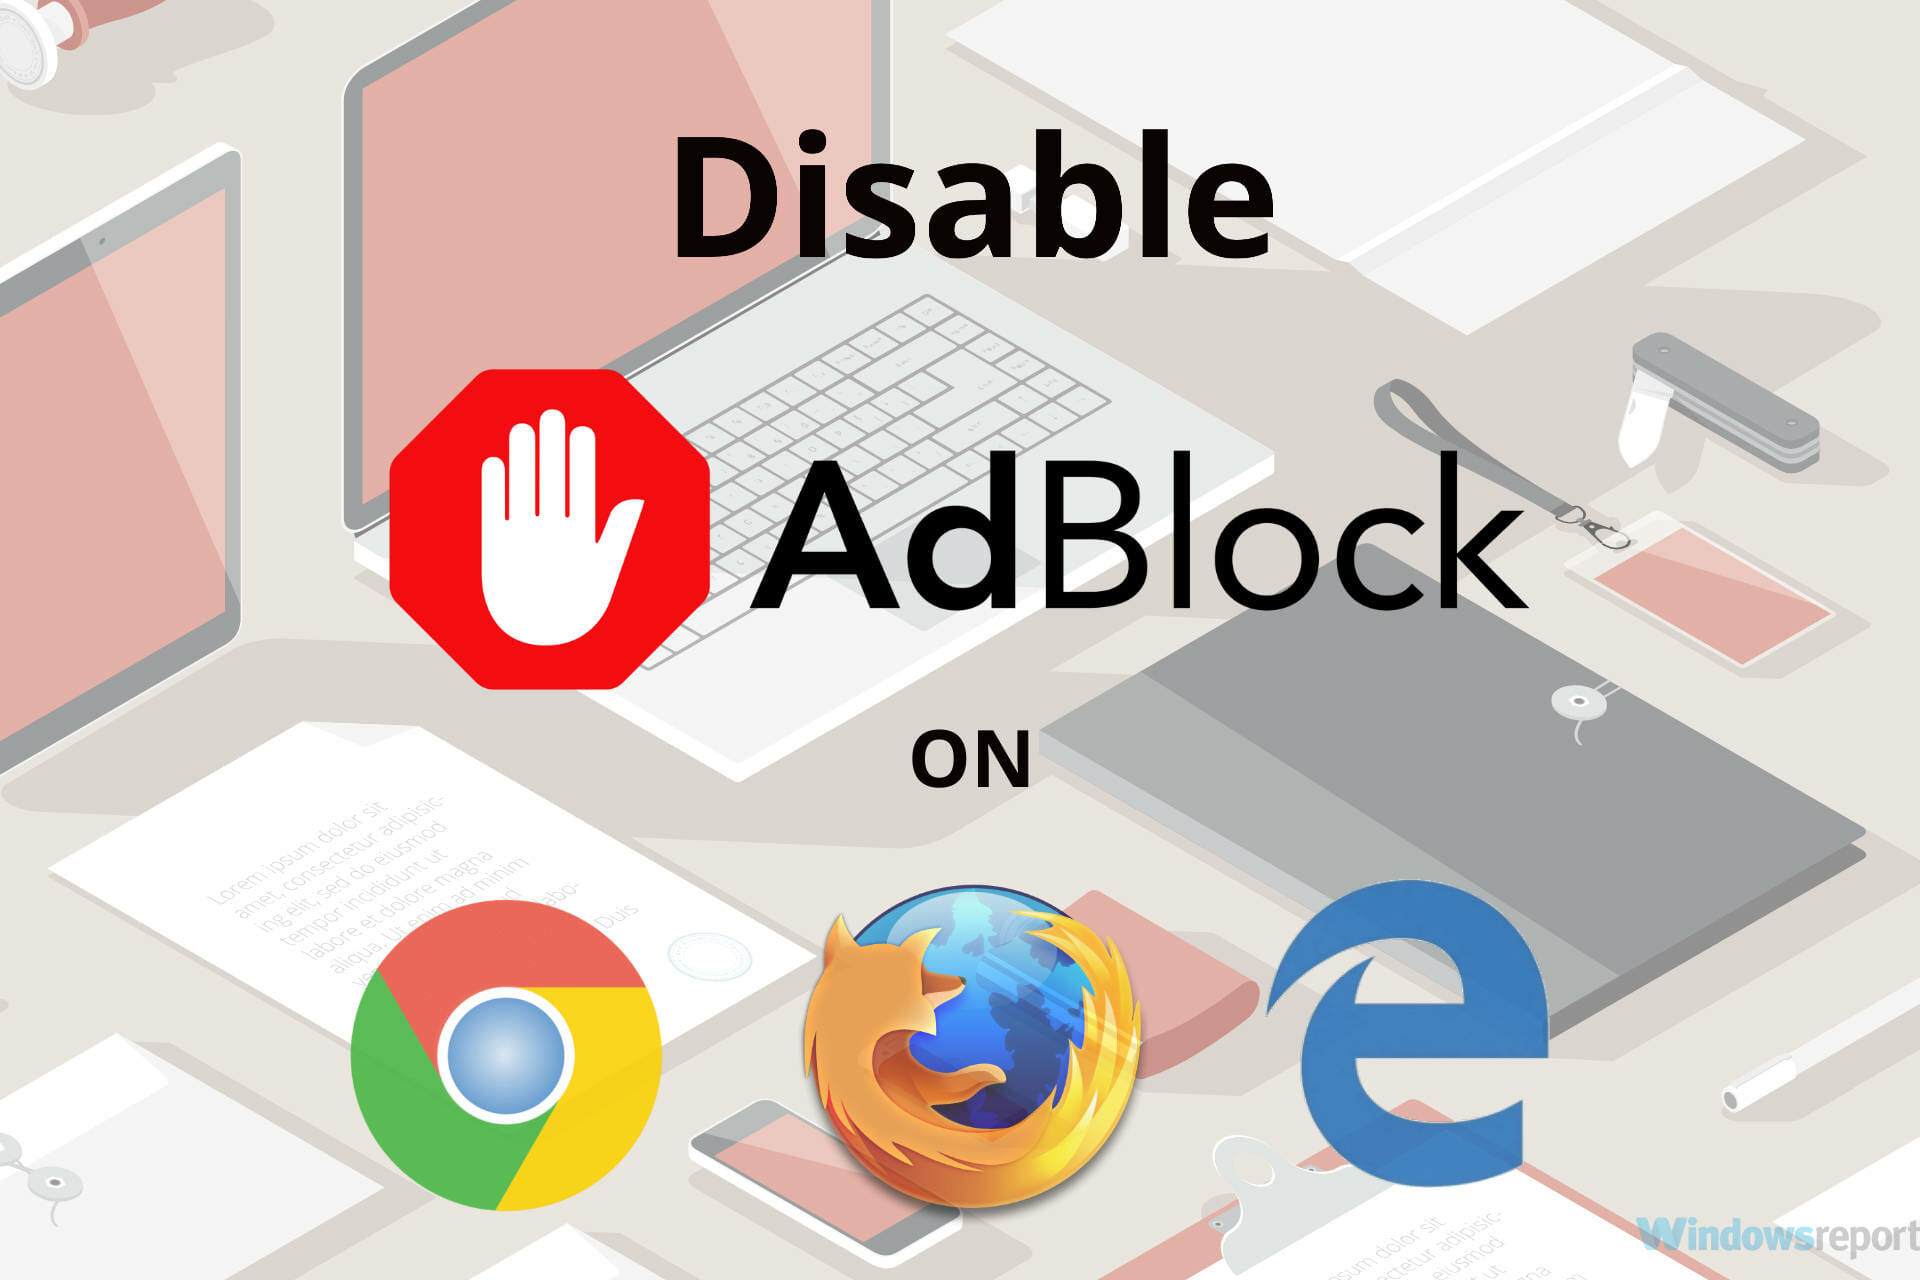 How to disable AdBlock on Chrome, Firefox, Edge